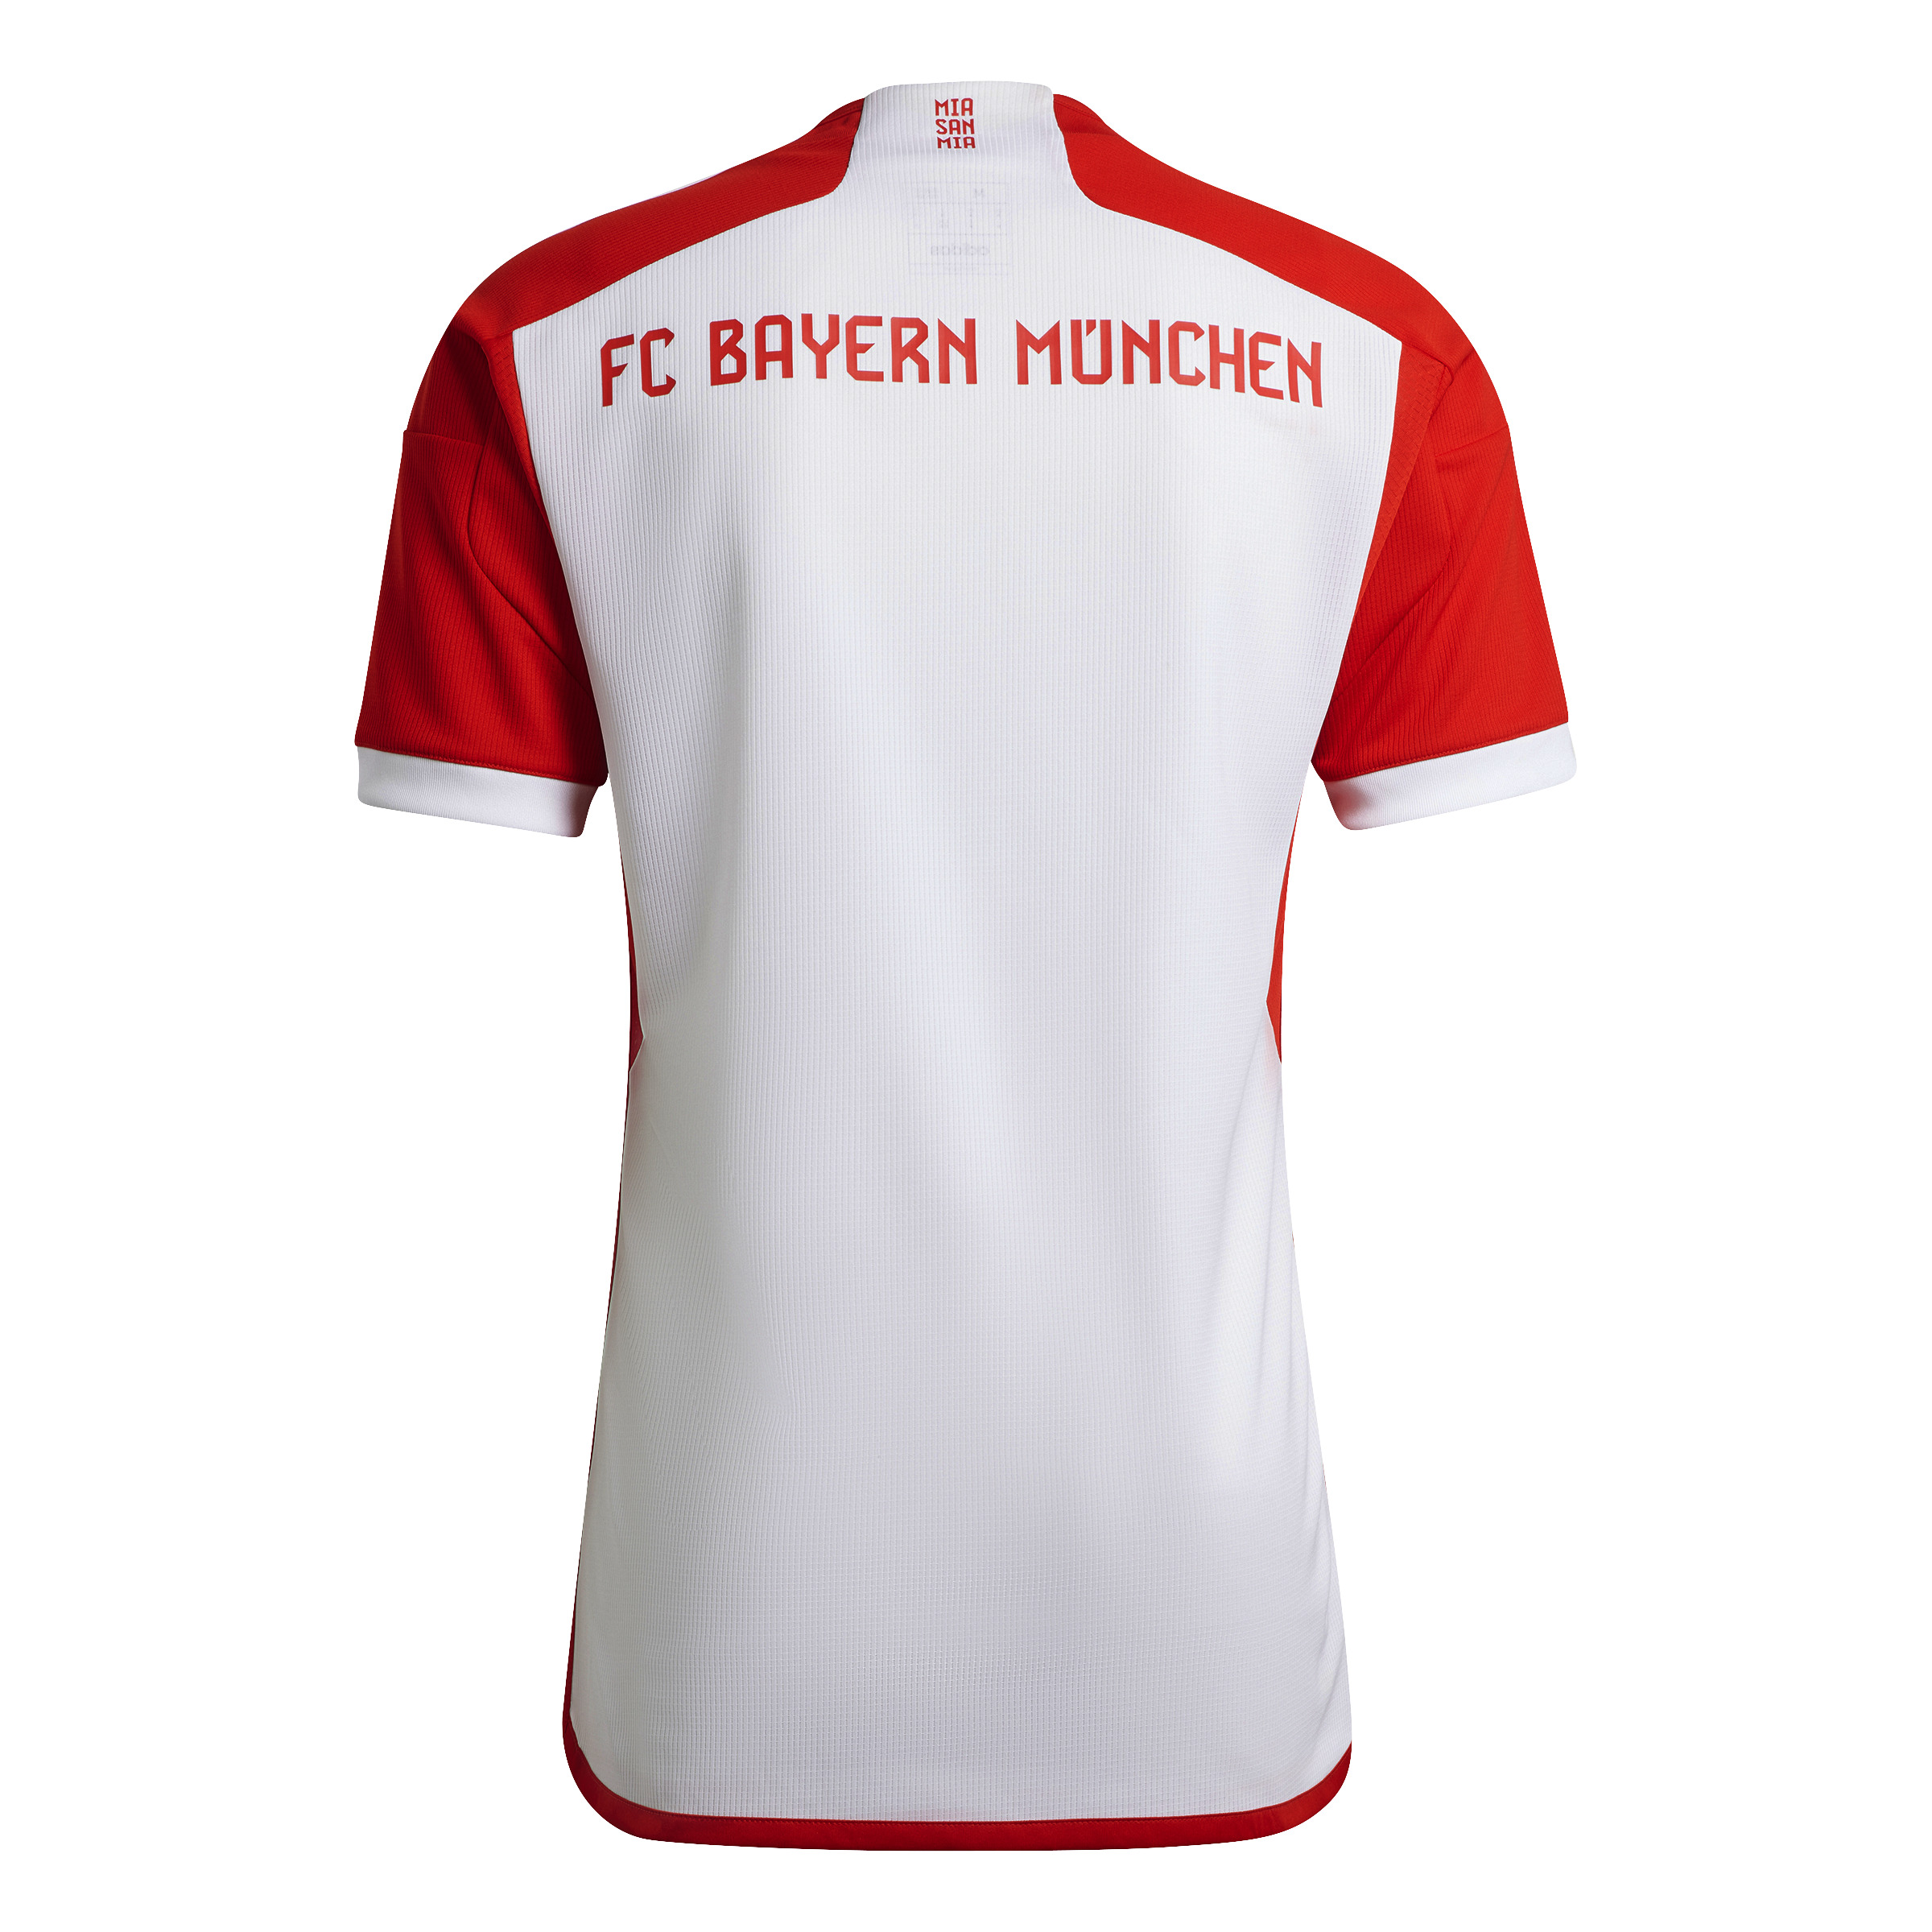 FC BAYERN MÜNCHEN 23/24 HEIMTRIKOT